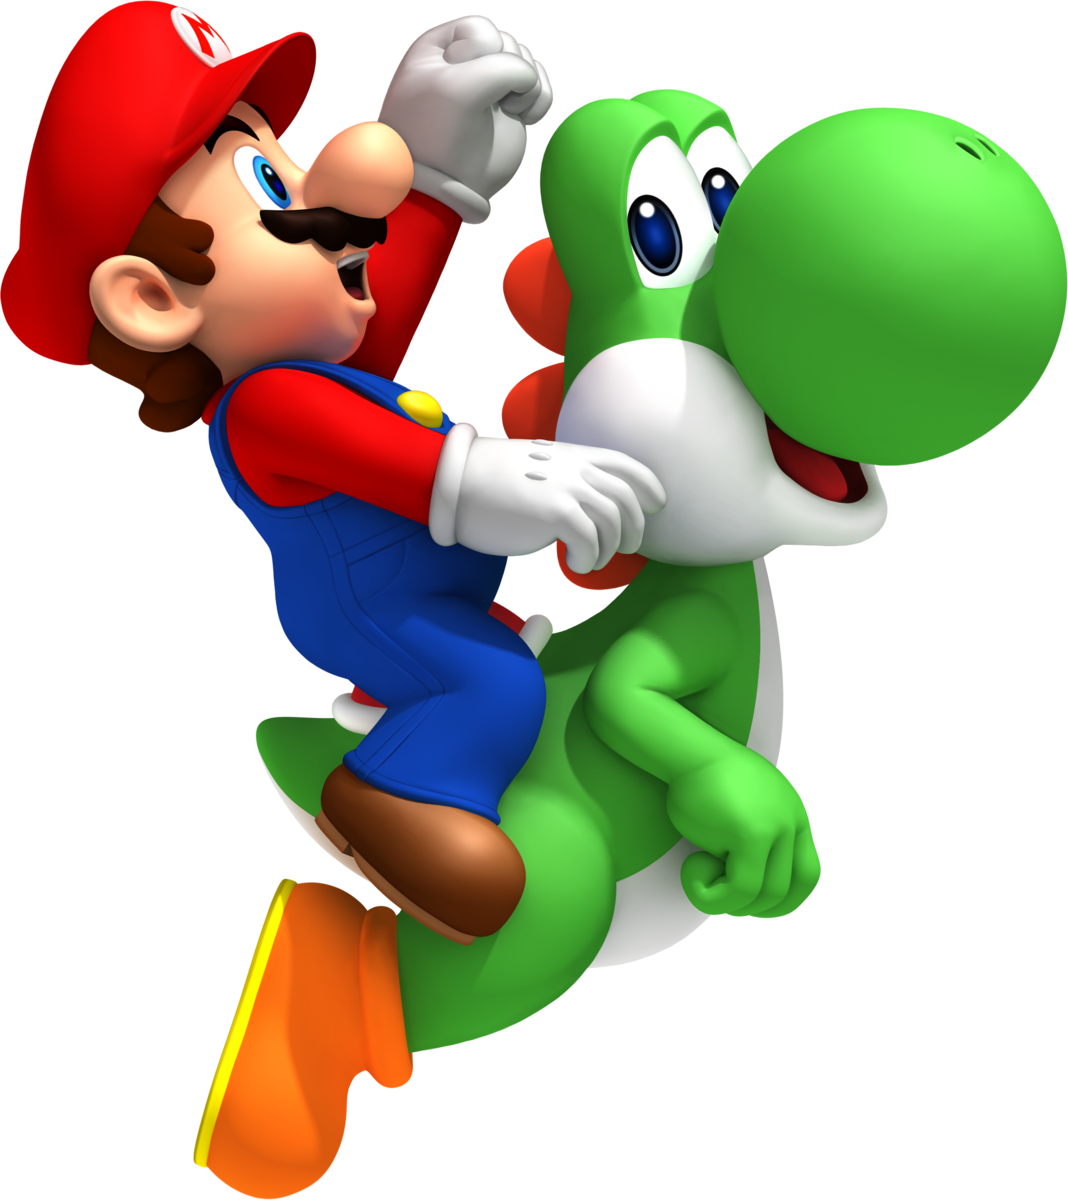 Filensmbw Mario And Yoshi Jumping Artworkpng Super Mario Wiki The Mario Encyclopedia 7284